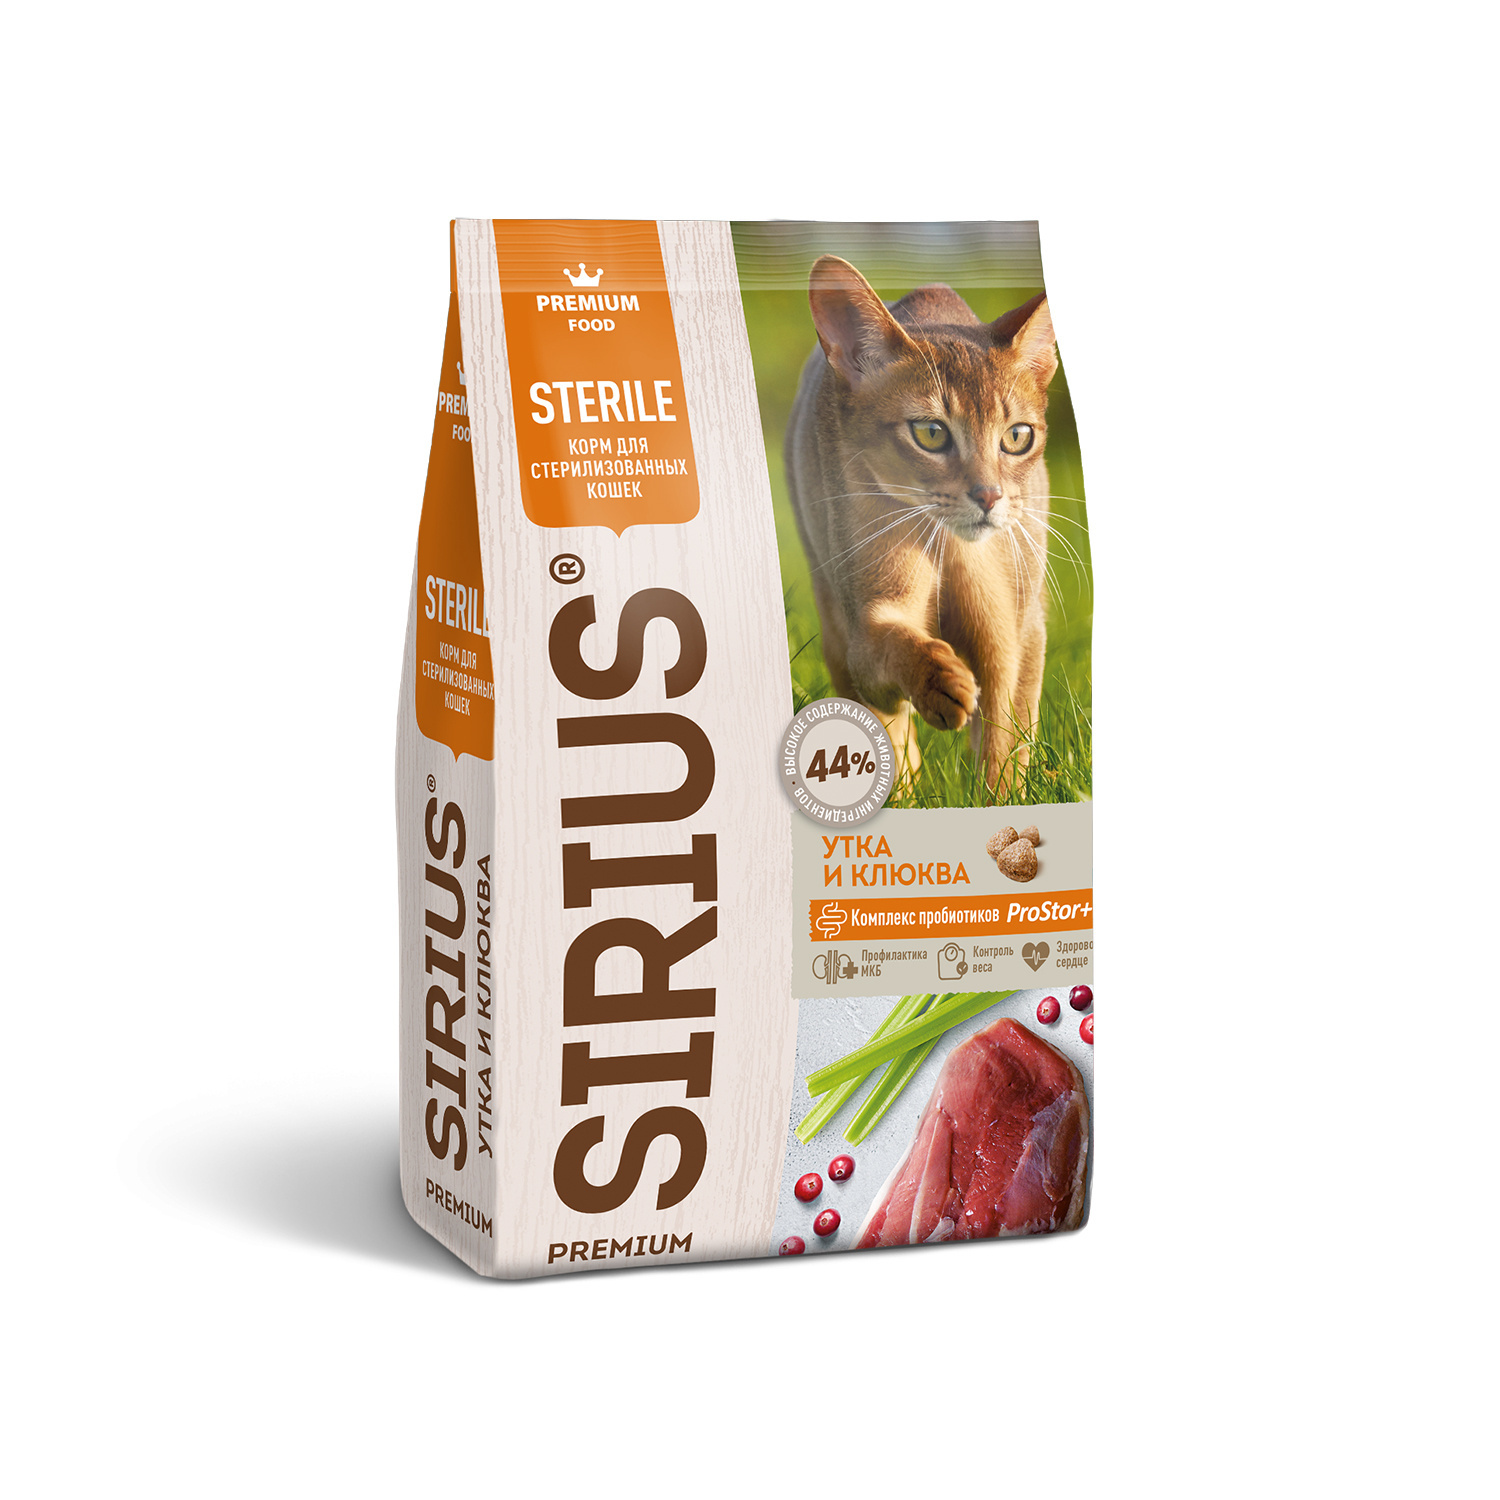 Sirius Sirius сухой корм для стерилизованных кошек, утка и клюква (400 г) sirius сухой корм для стерилизованных кошек 10кг утка и клюква